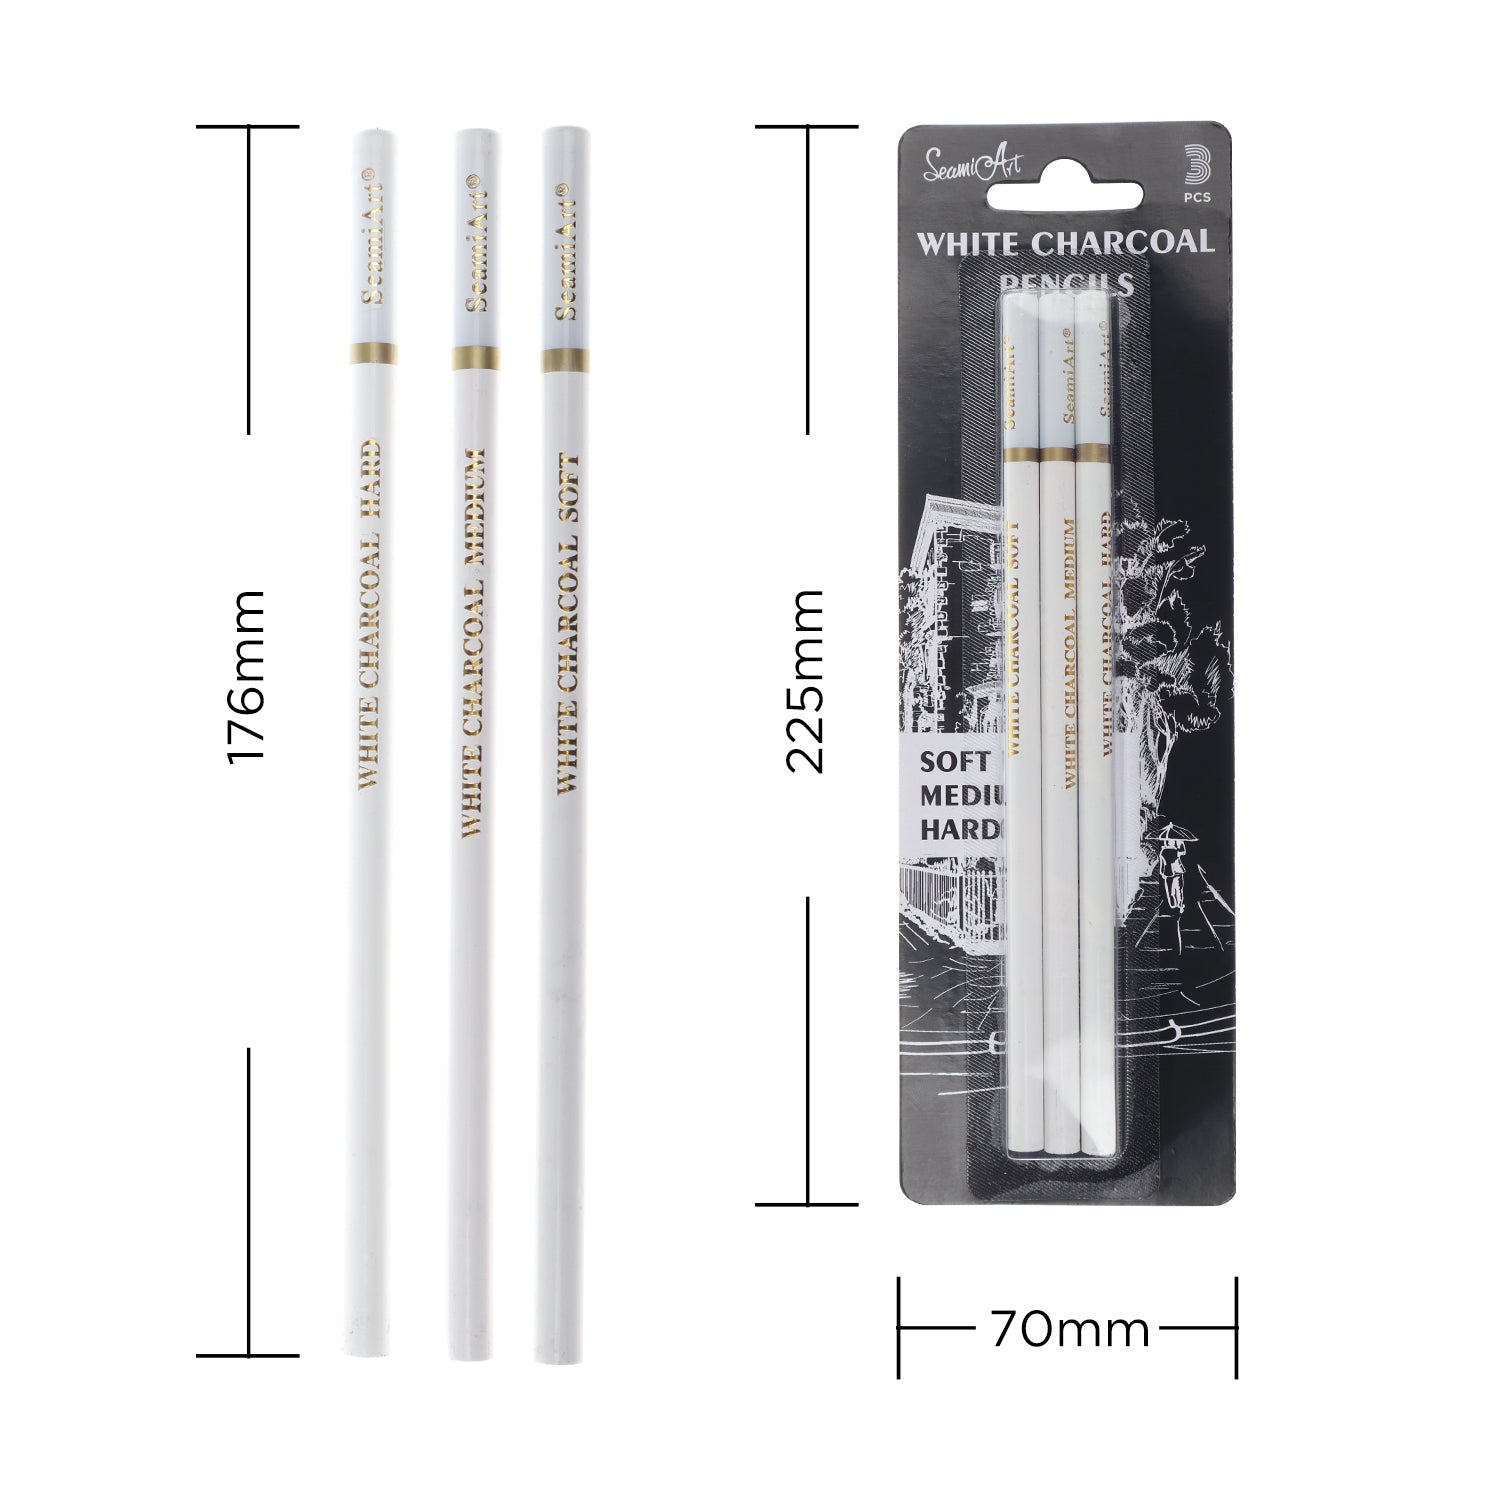 White Charcoal Pencils, Black Charcoal Pencil